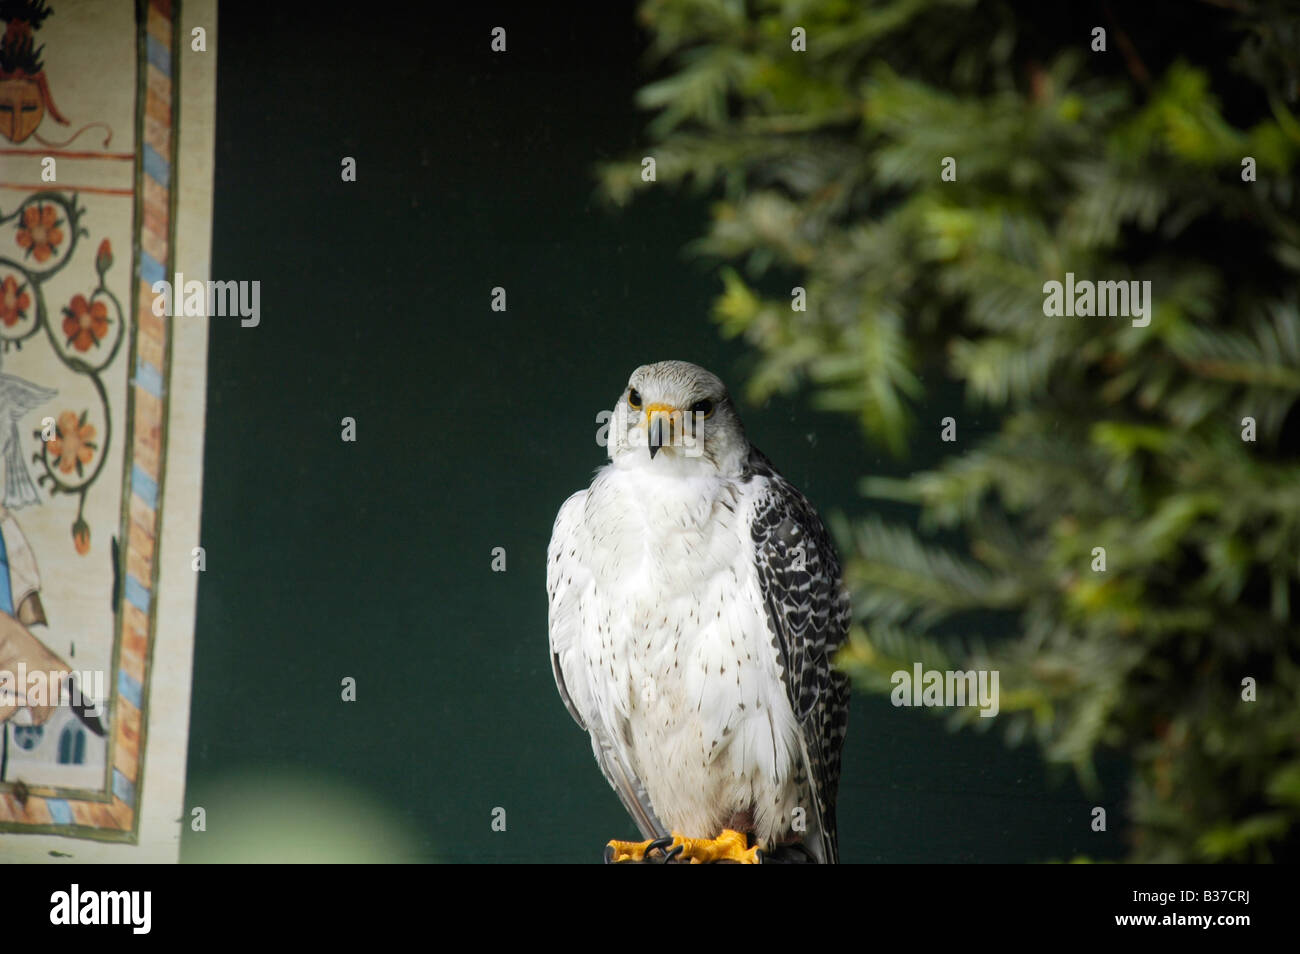 Austria County of Salzburg Hohenwerfen Castle Birds of Prey Show a Falcon Stock Photo